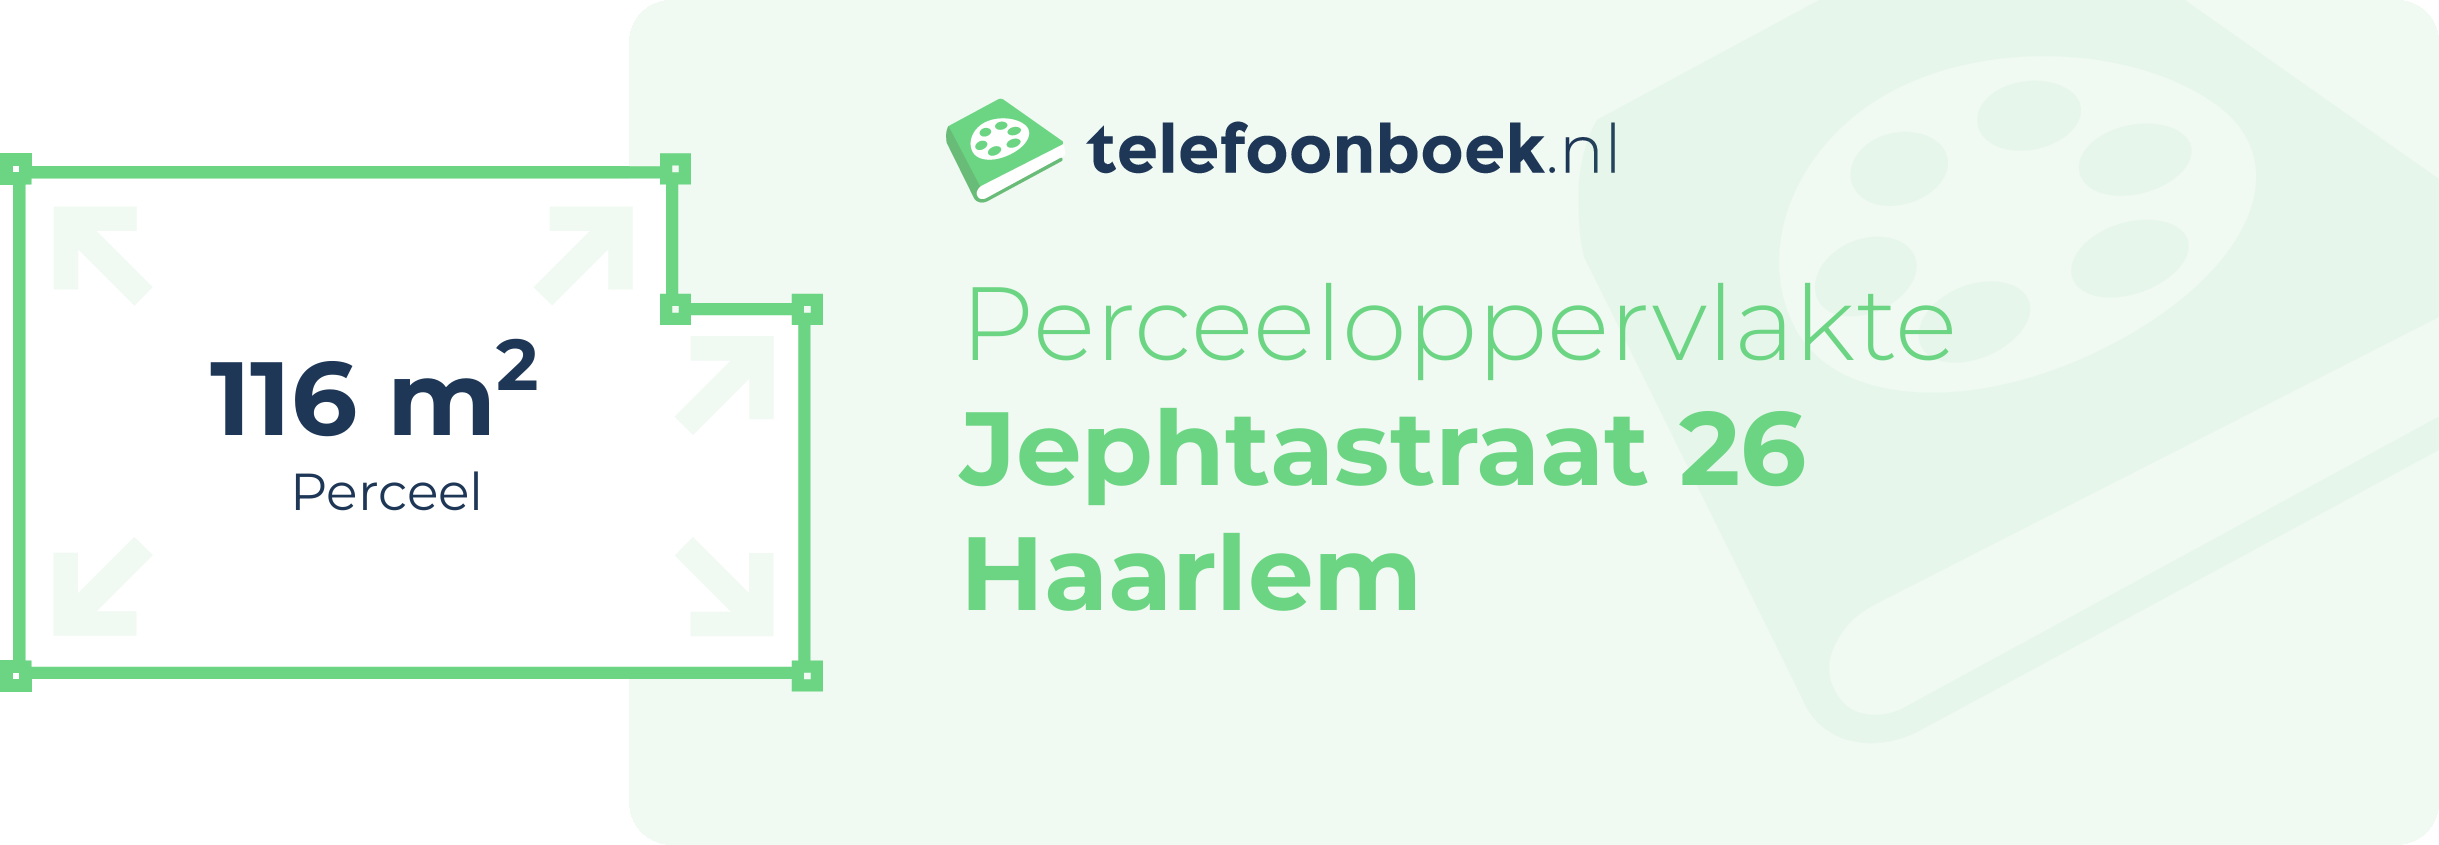 Perceeloppervlakte Jephtastraat 26 Haarlem